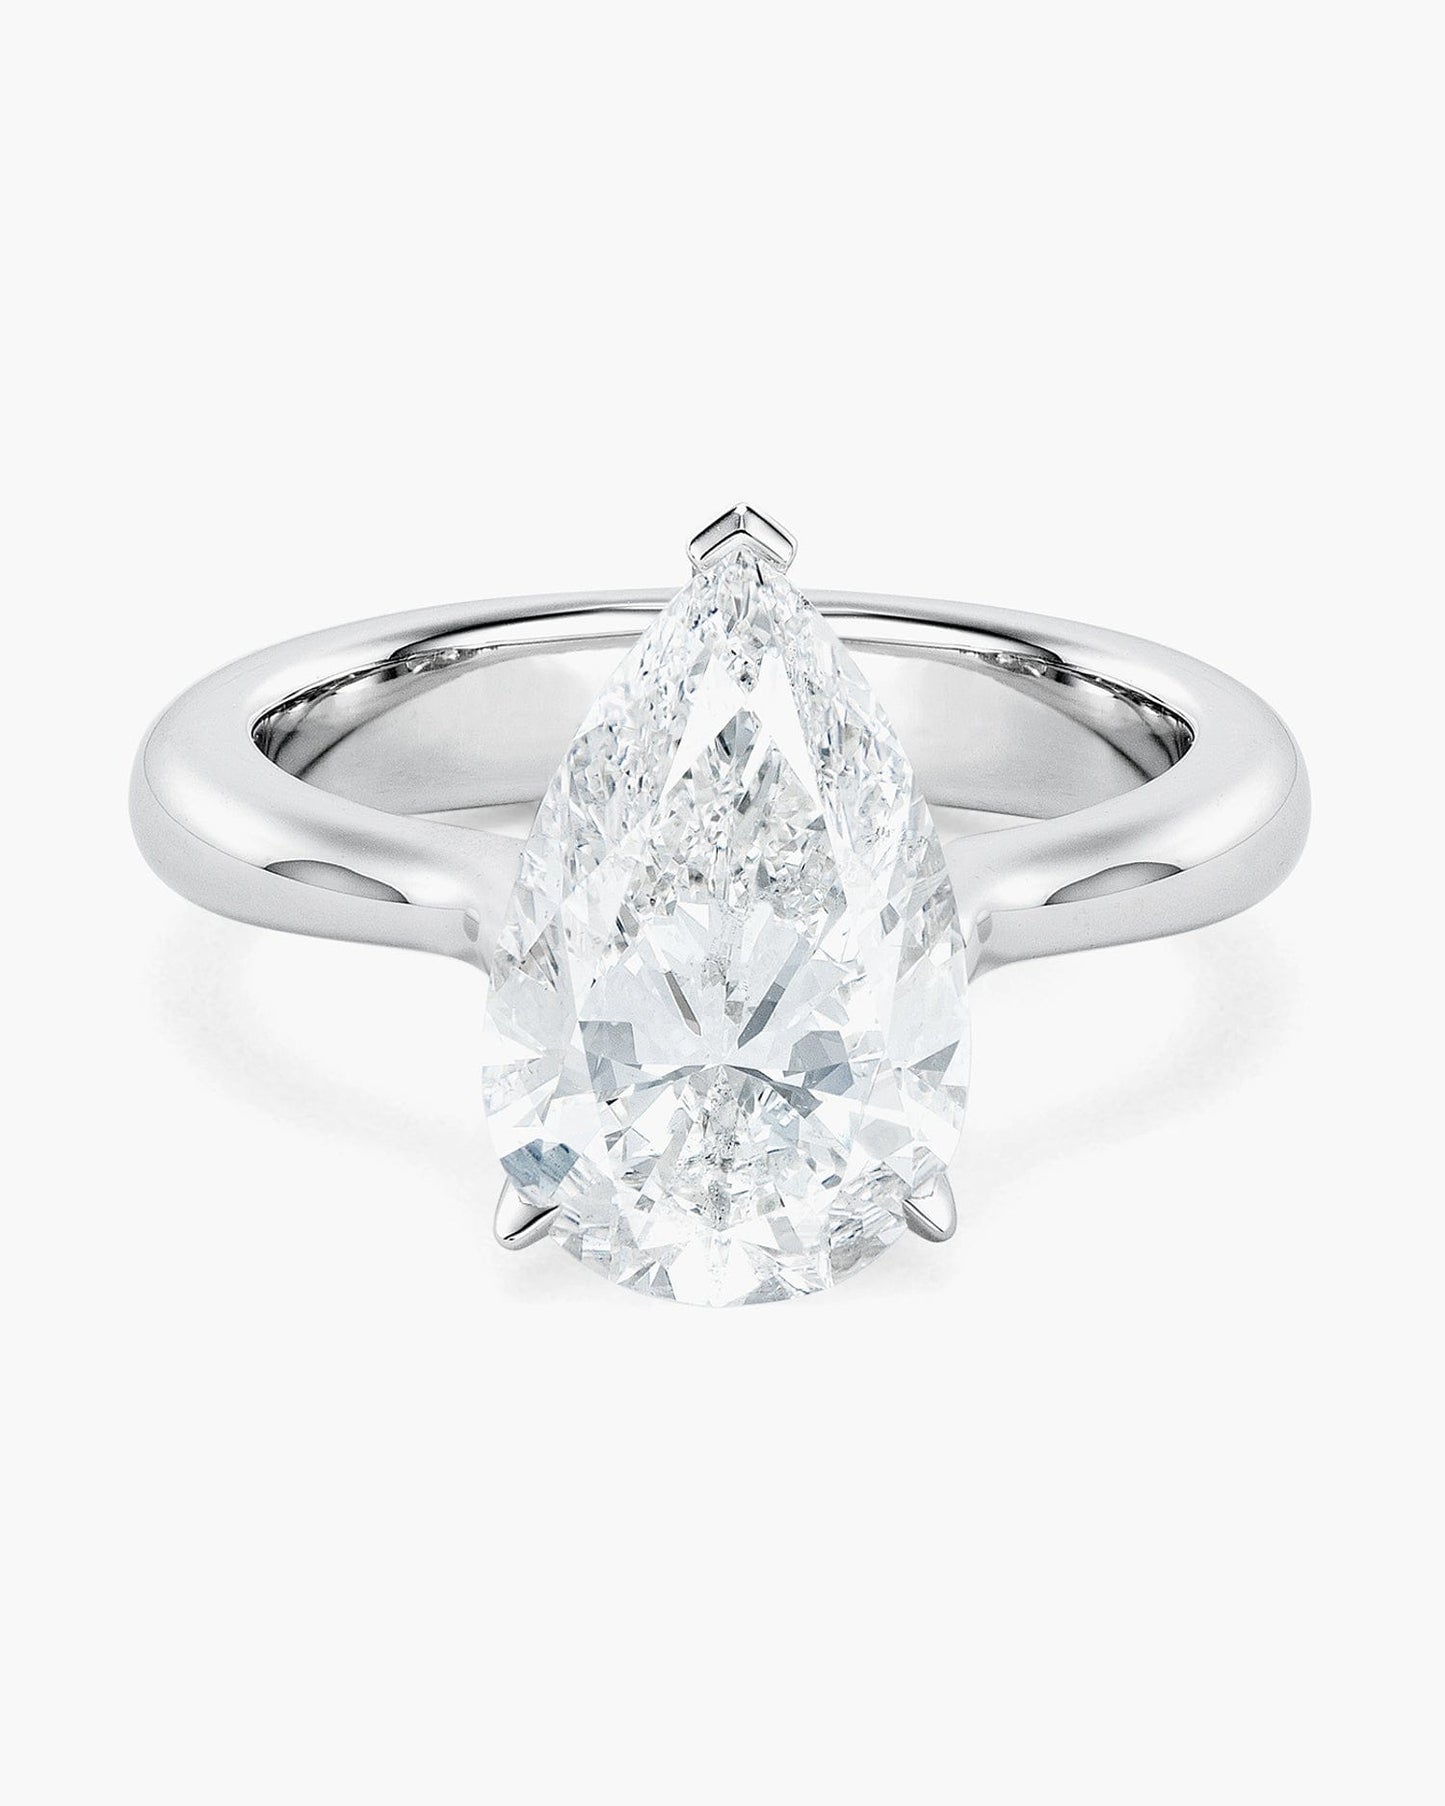 3.24 carat Pear Shape Diamond Ring